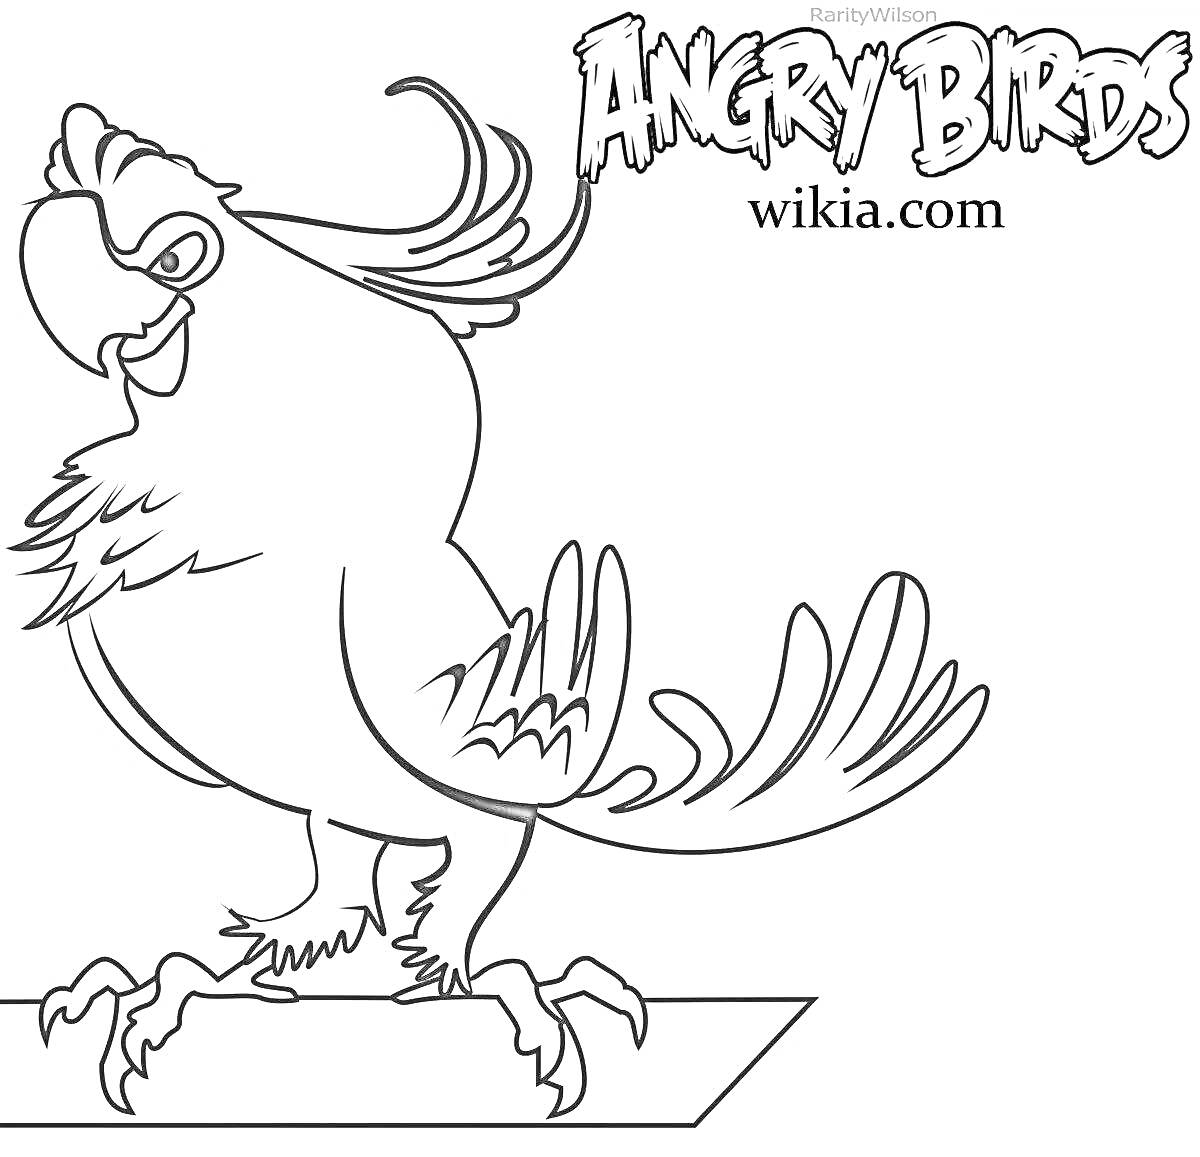 Раскраска Angry Birds, попугай на ветке, wikia.com